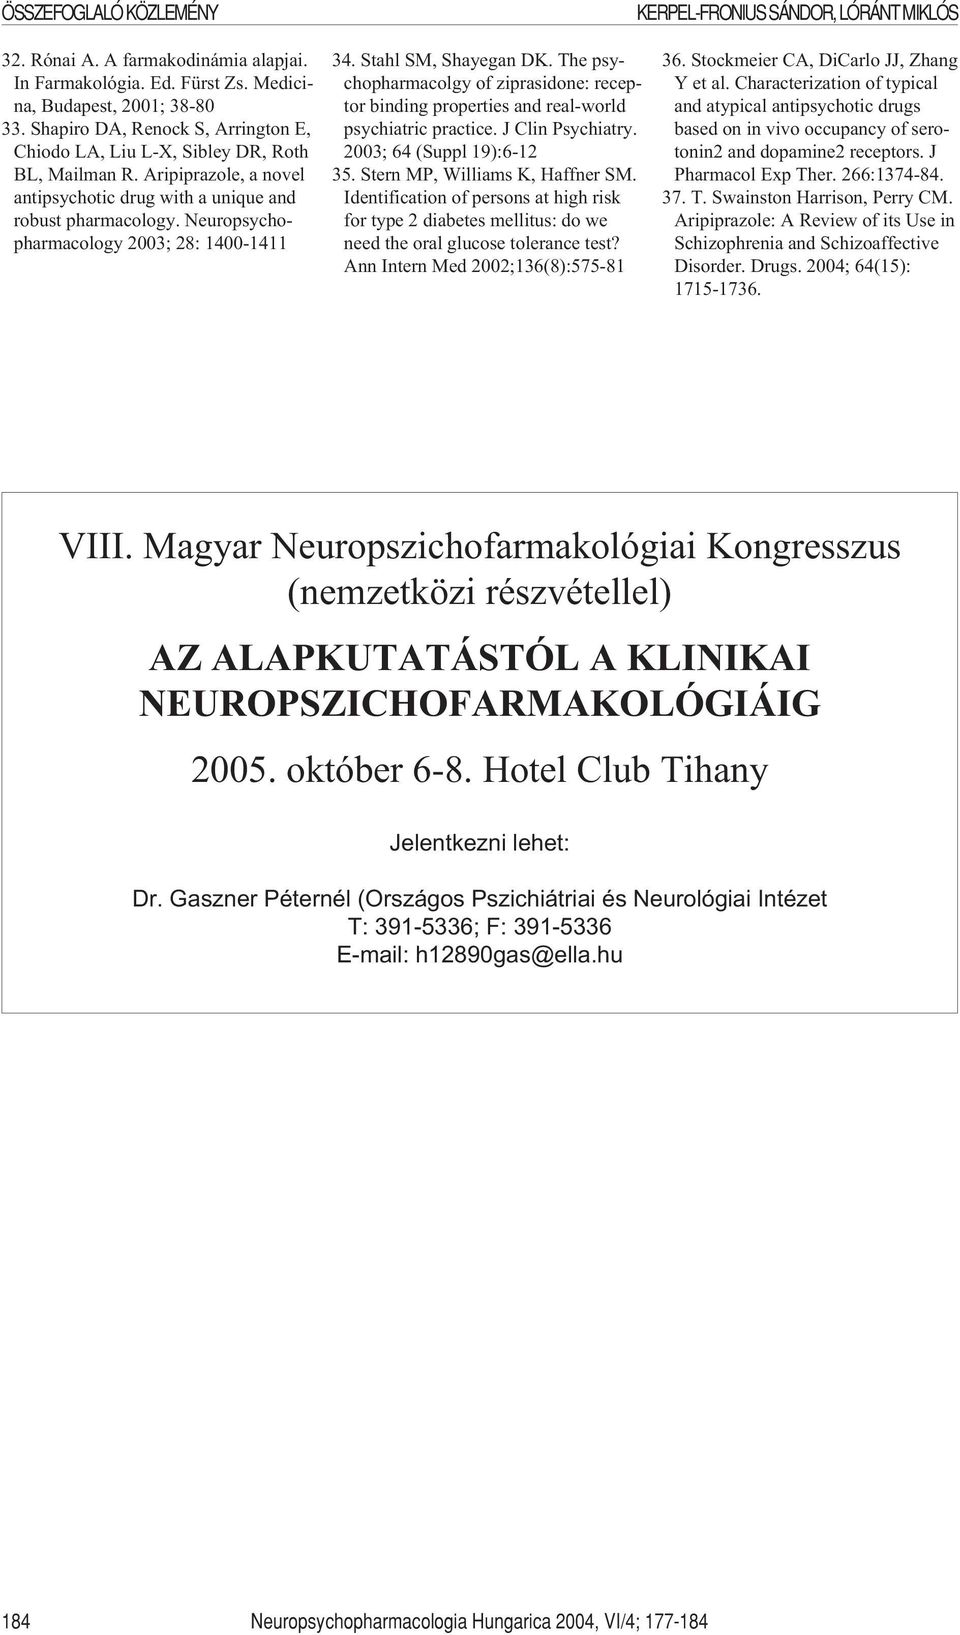 Neuropsychopharmacology 2003; 28: 1400-1411 34. Stahl SM, Shayegan DK. The psychopharmacolgy of ziprasidone: receptor binding properties and real-world psychiatric practice. J Clin Psychiatry.